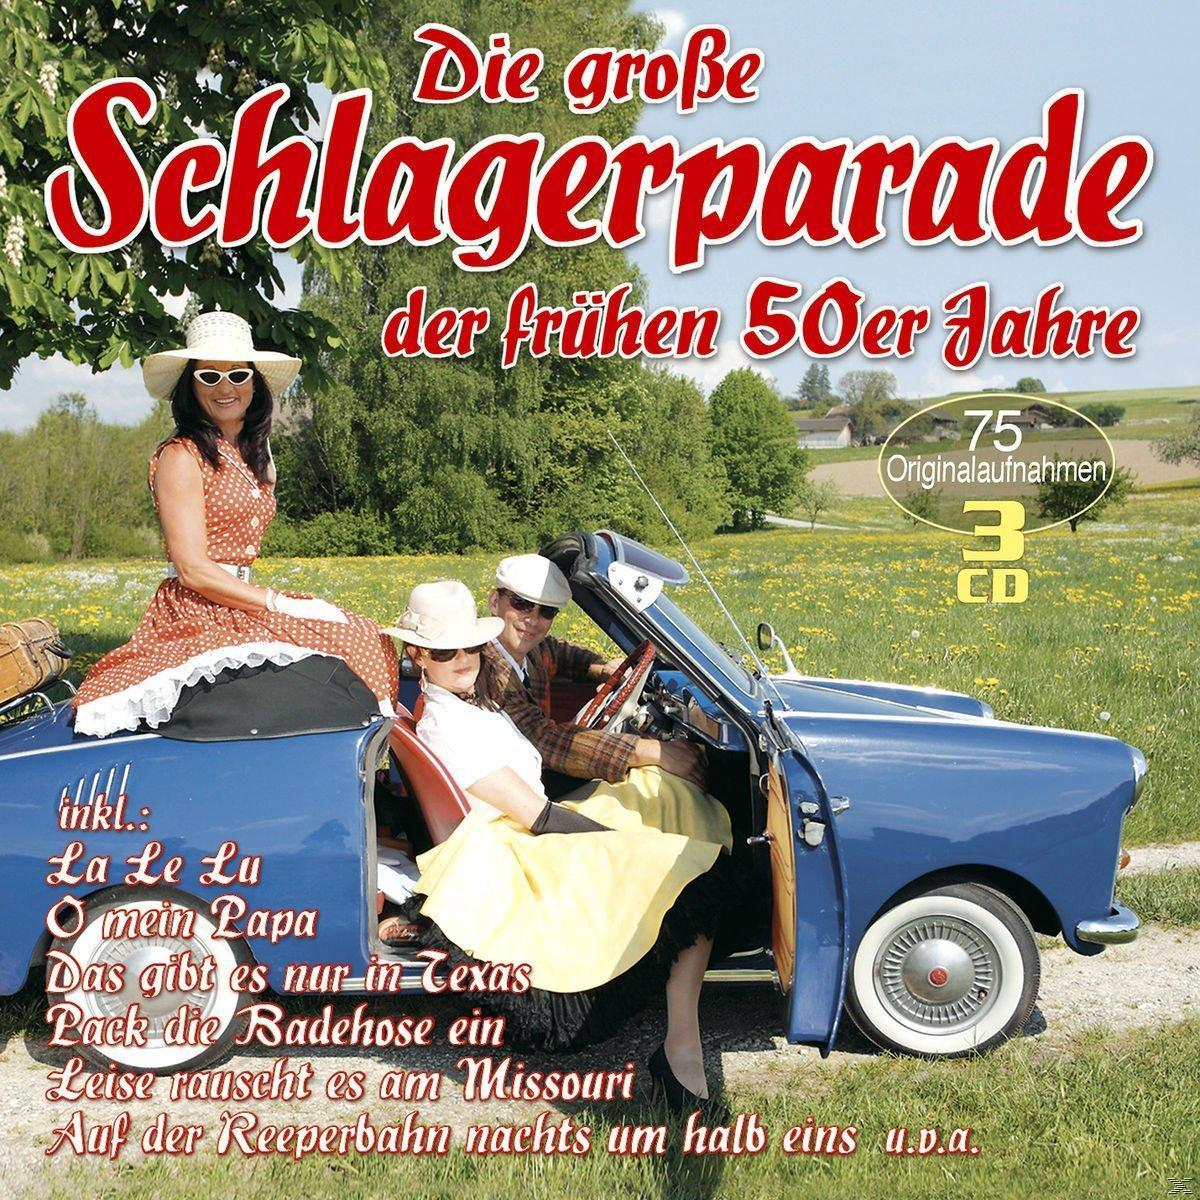 VARIOUS - Die Große 50er (CD) - Jahre Der Frühen Schlagerparade